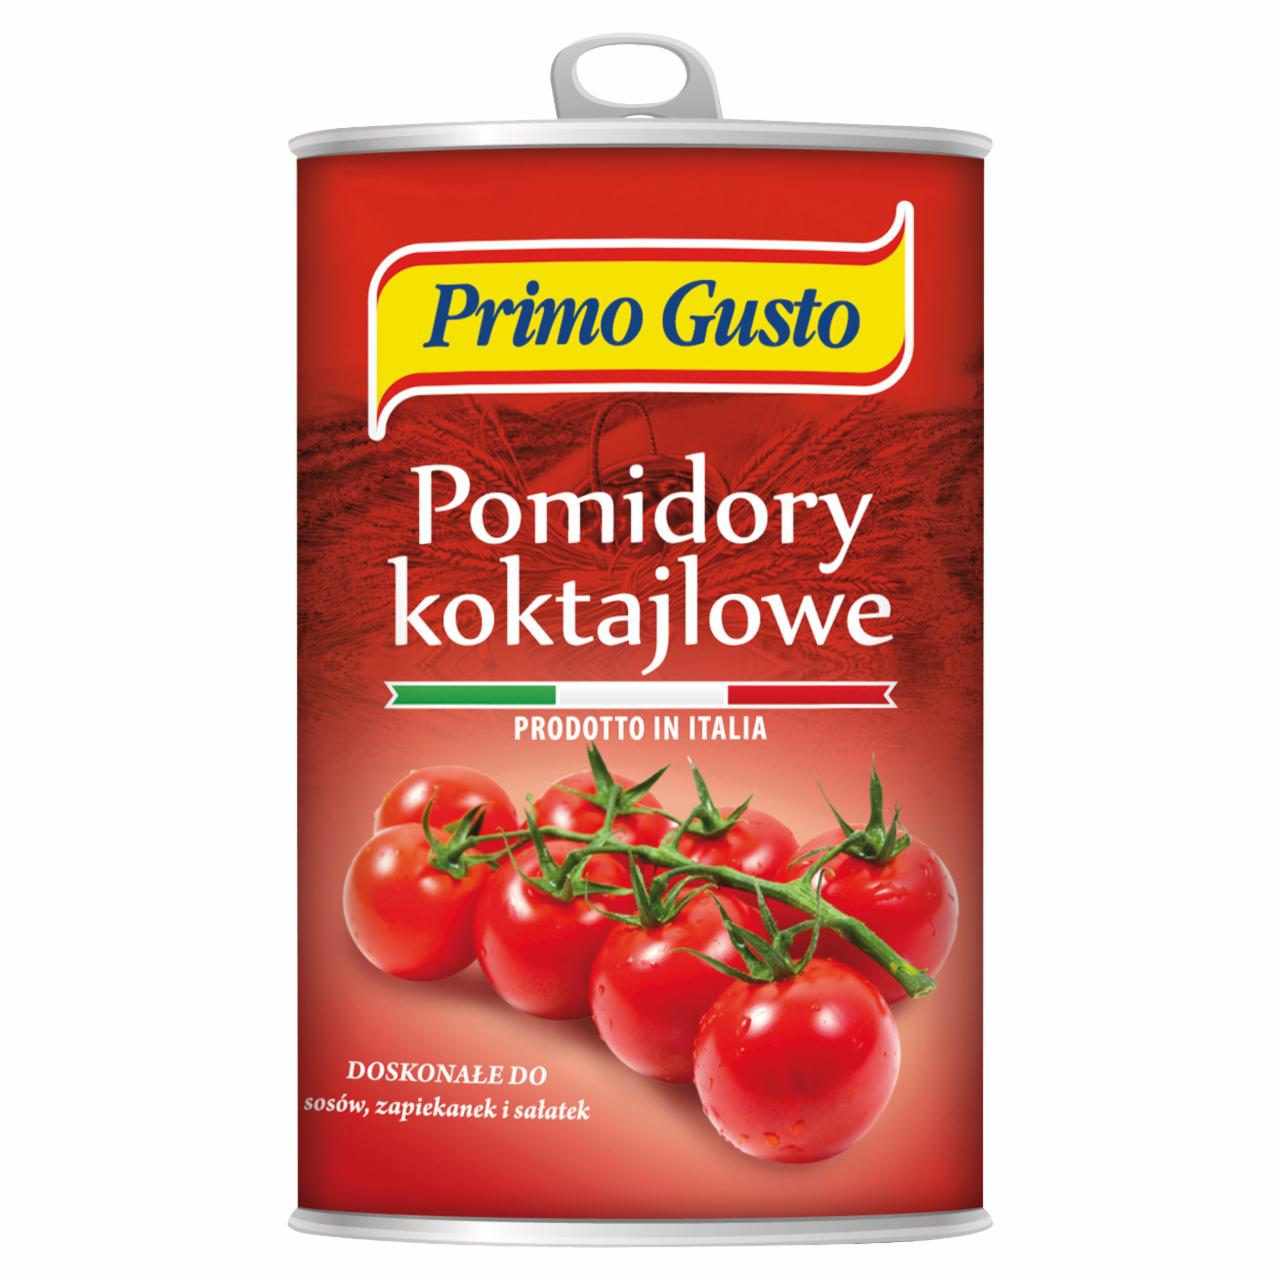 Zdjęcia - Pomidory koktajlowe Primo Gusto